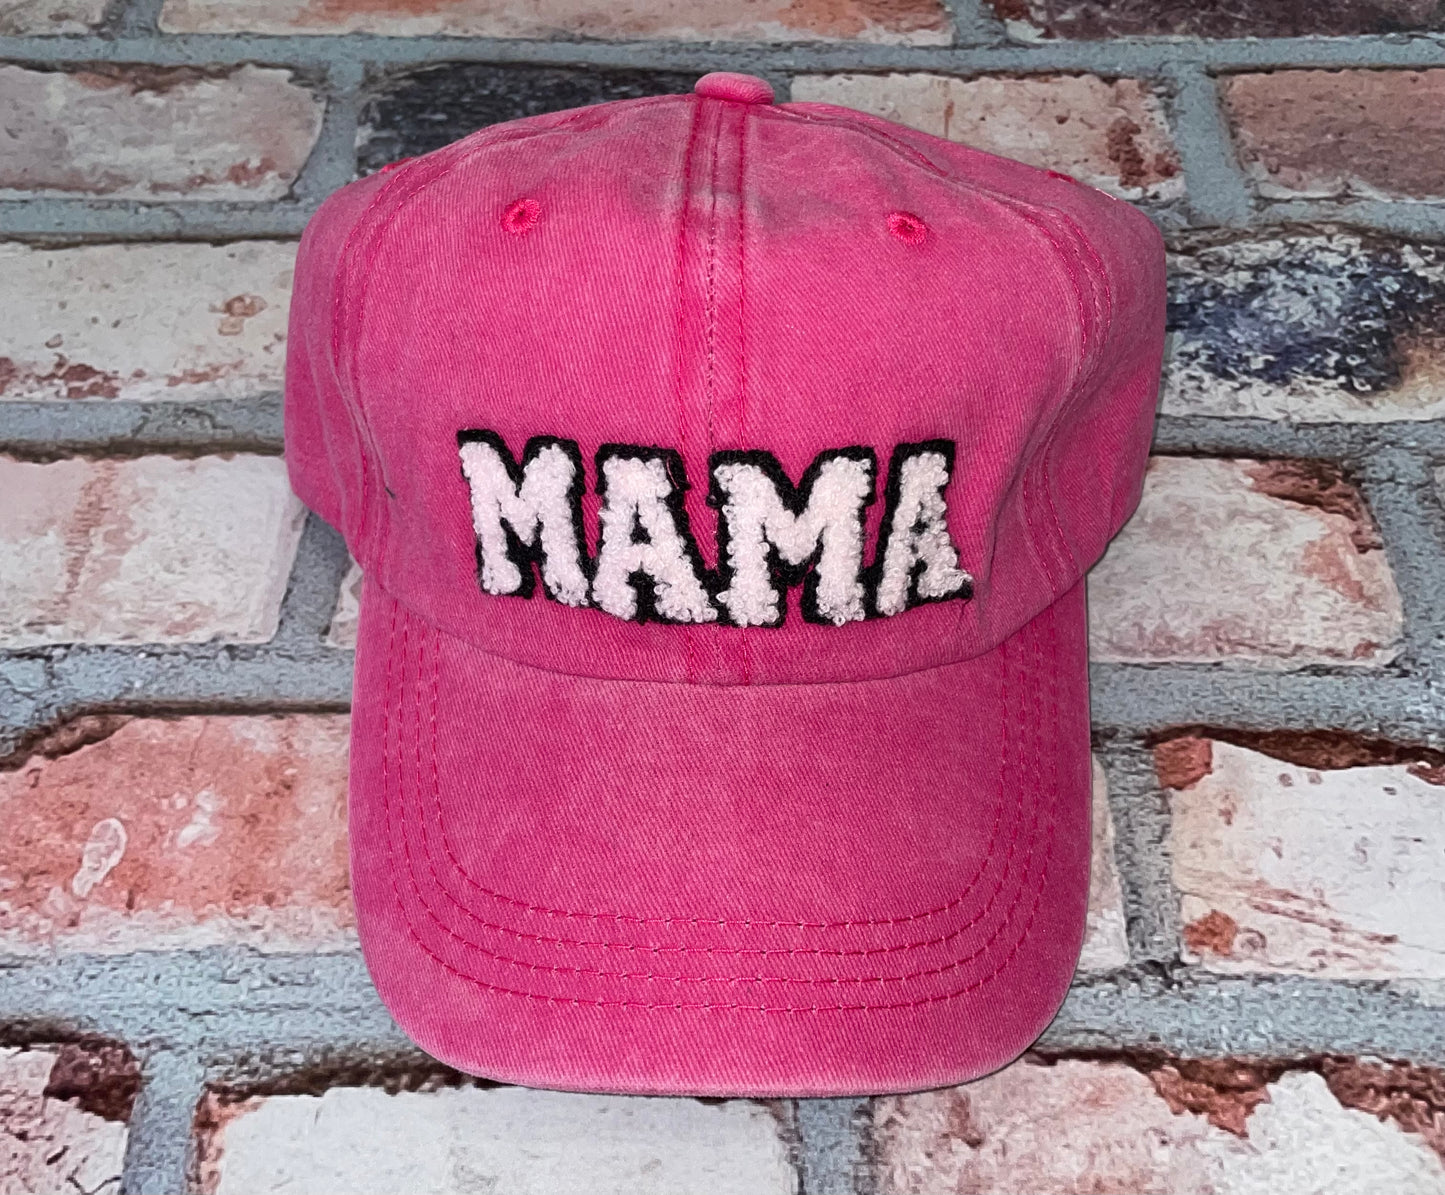 SALE Mama Baseball Caps